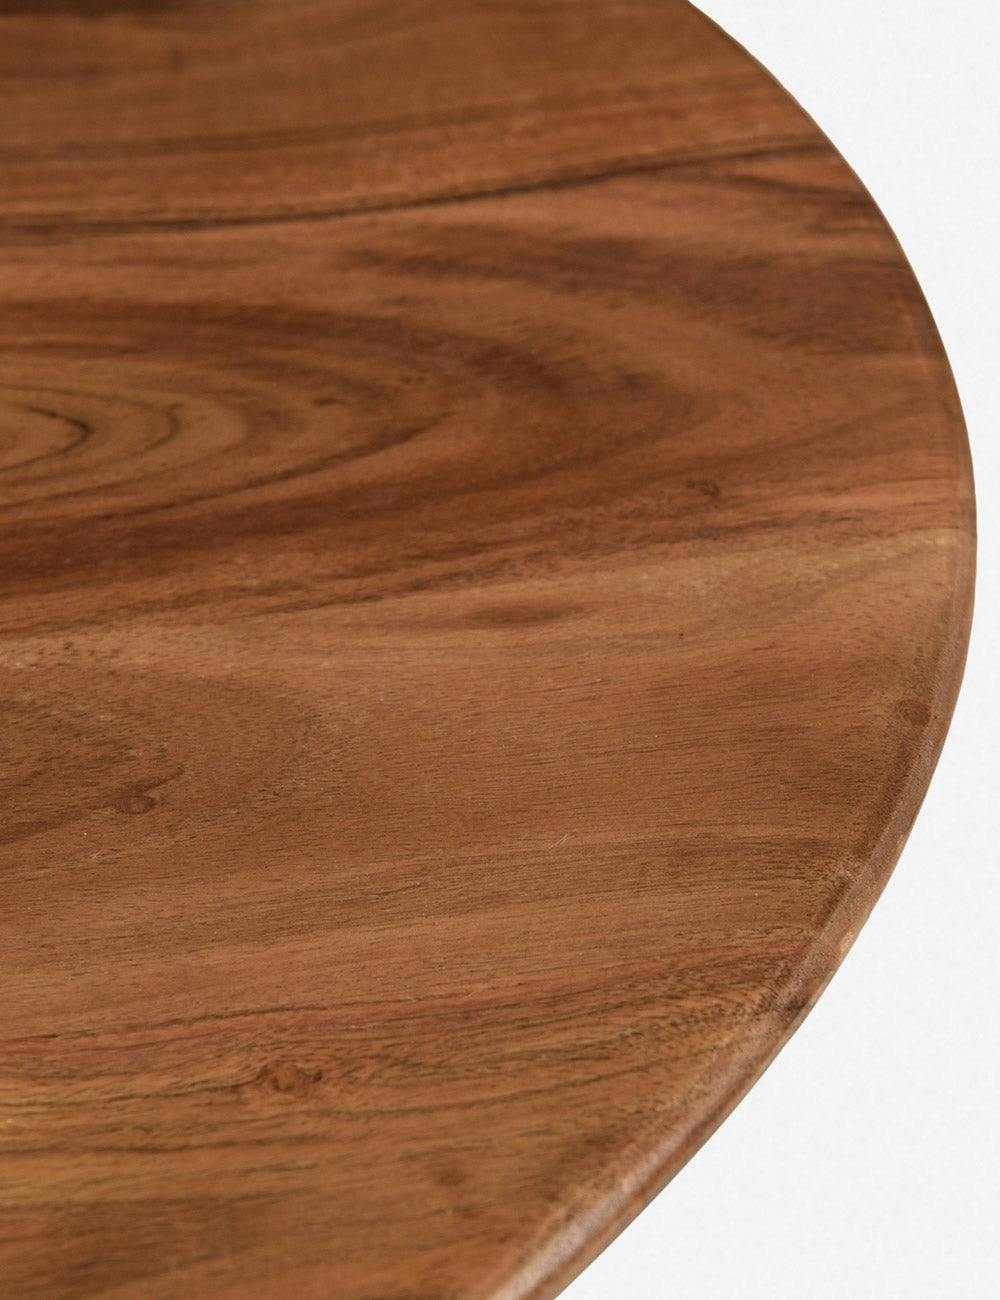 Dalton 55 lb Capacity Round Walnut Acacia Wood Coffee Table